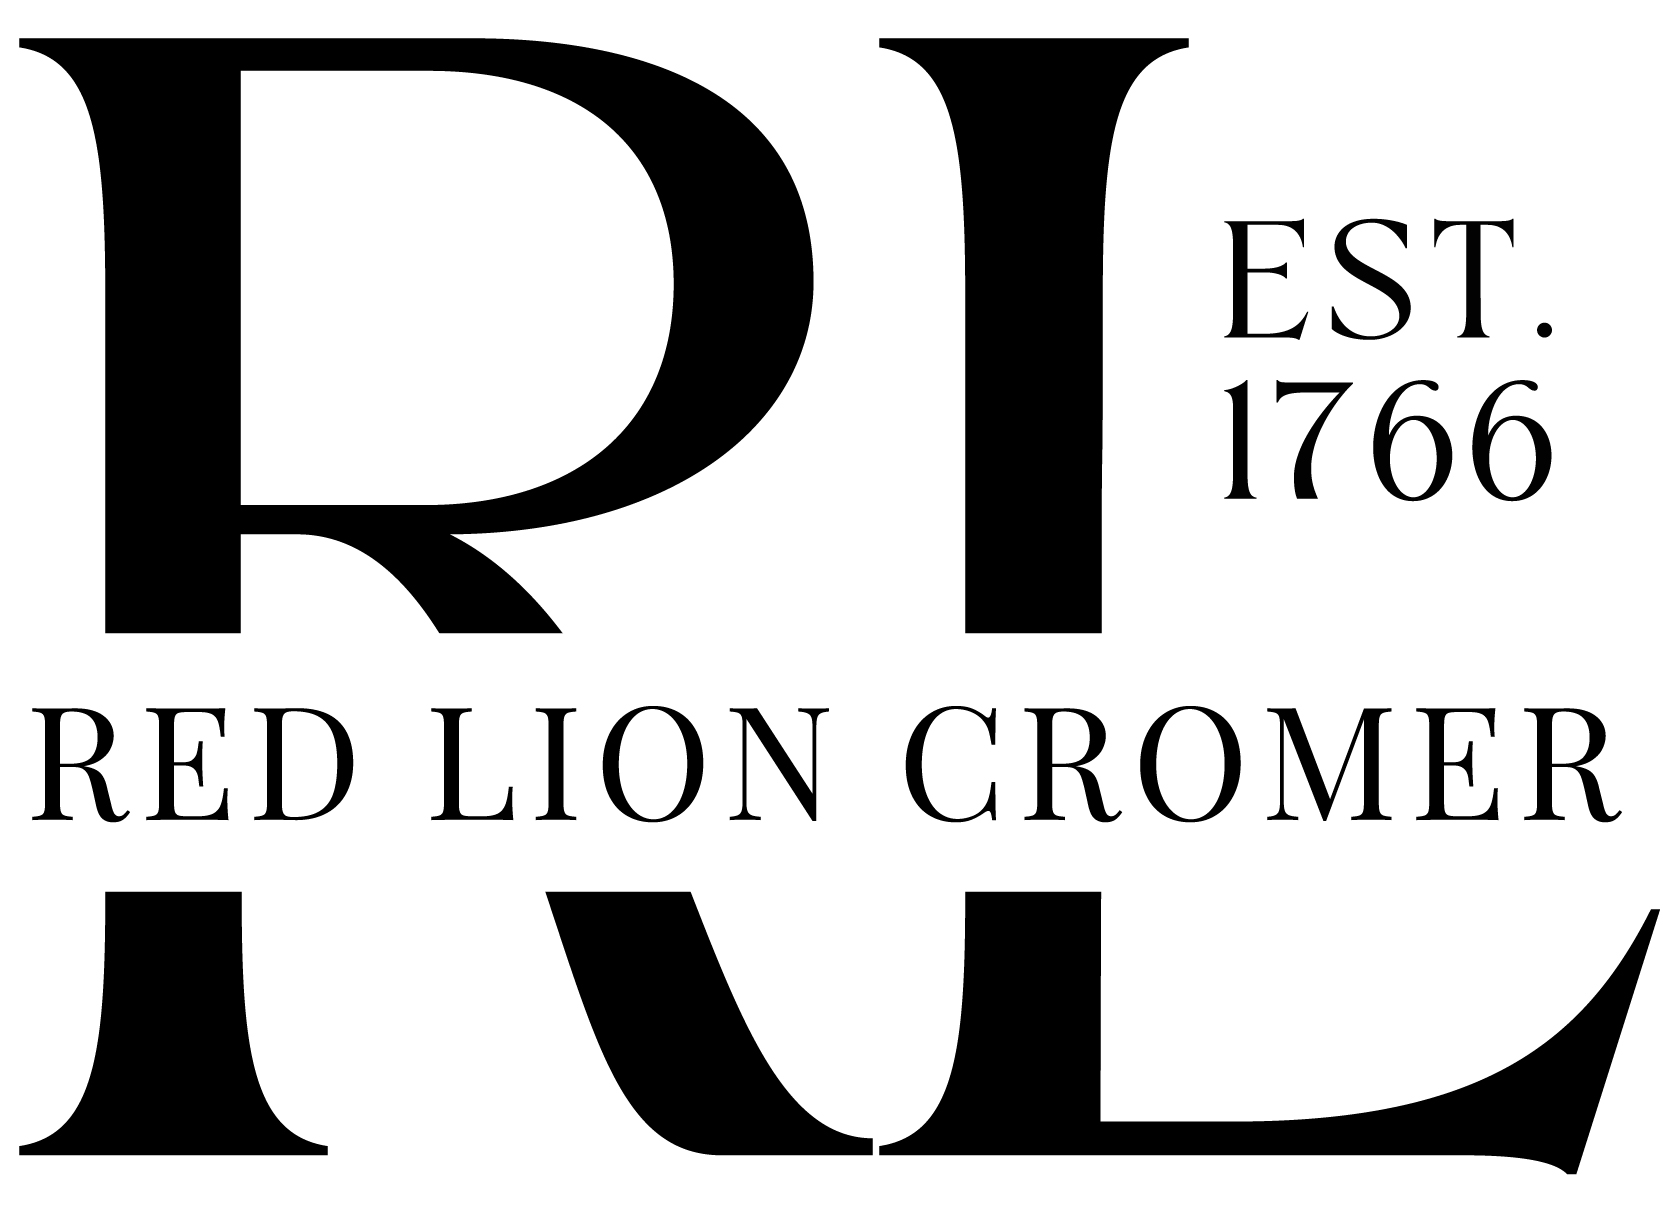 Red Lion Cromer